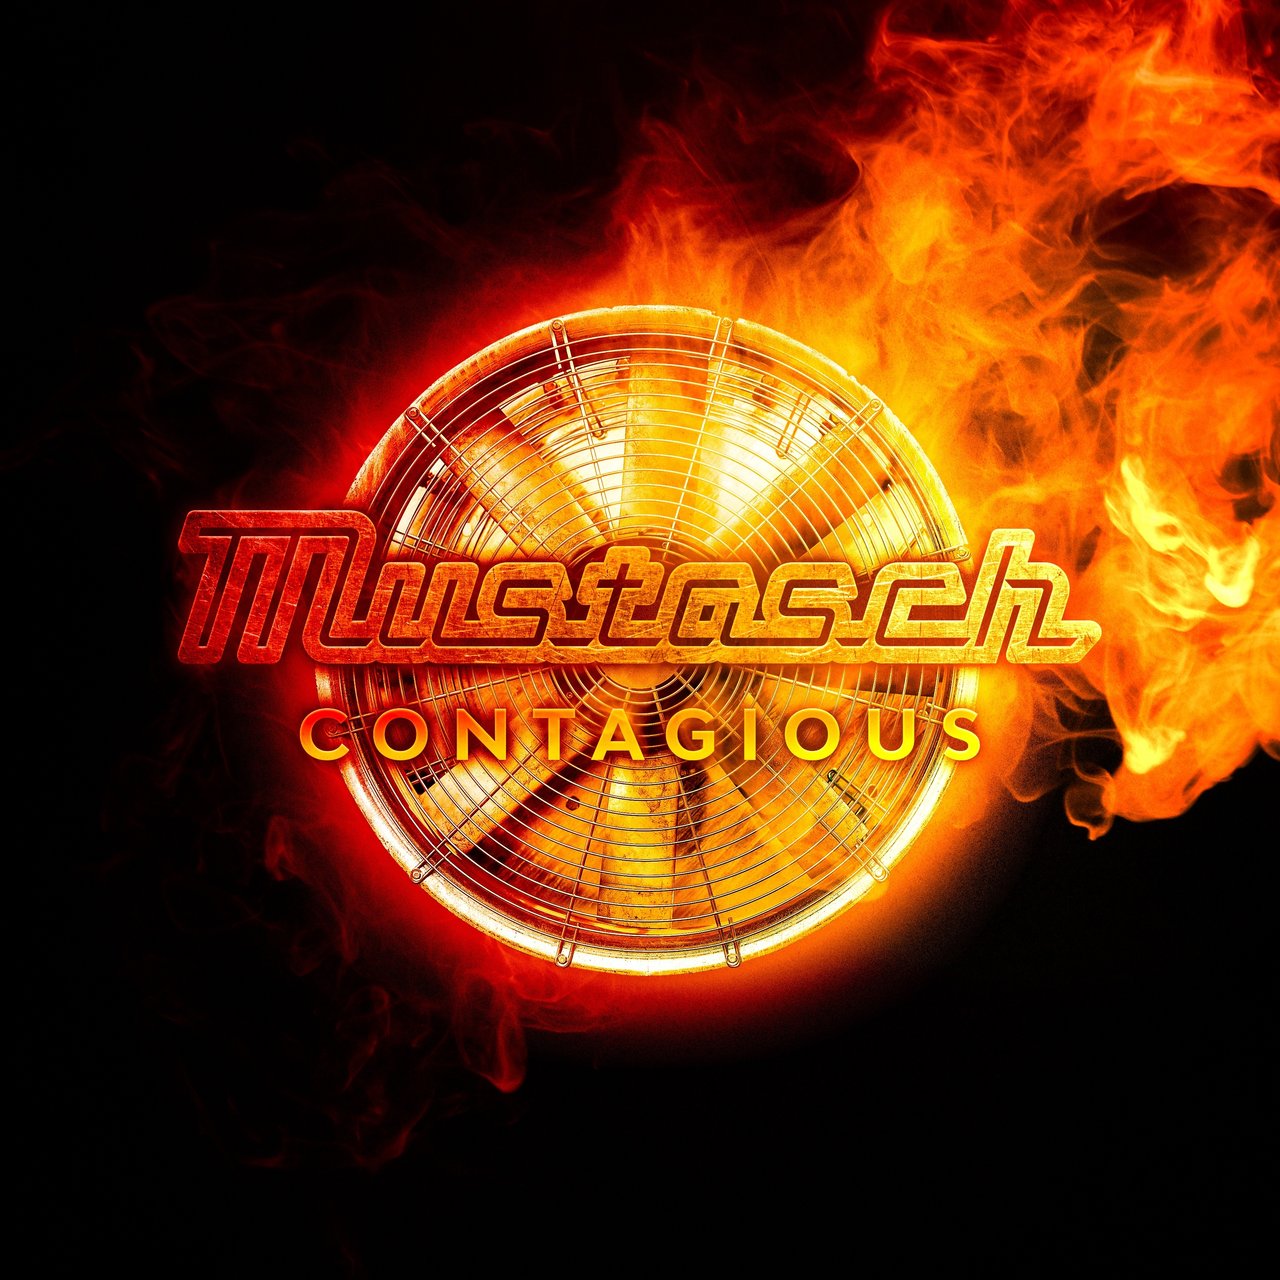 Mustasch Contagious cover artwork